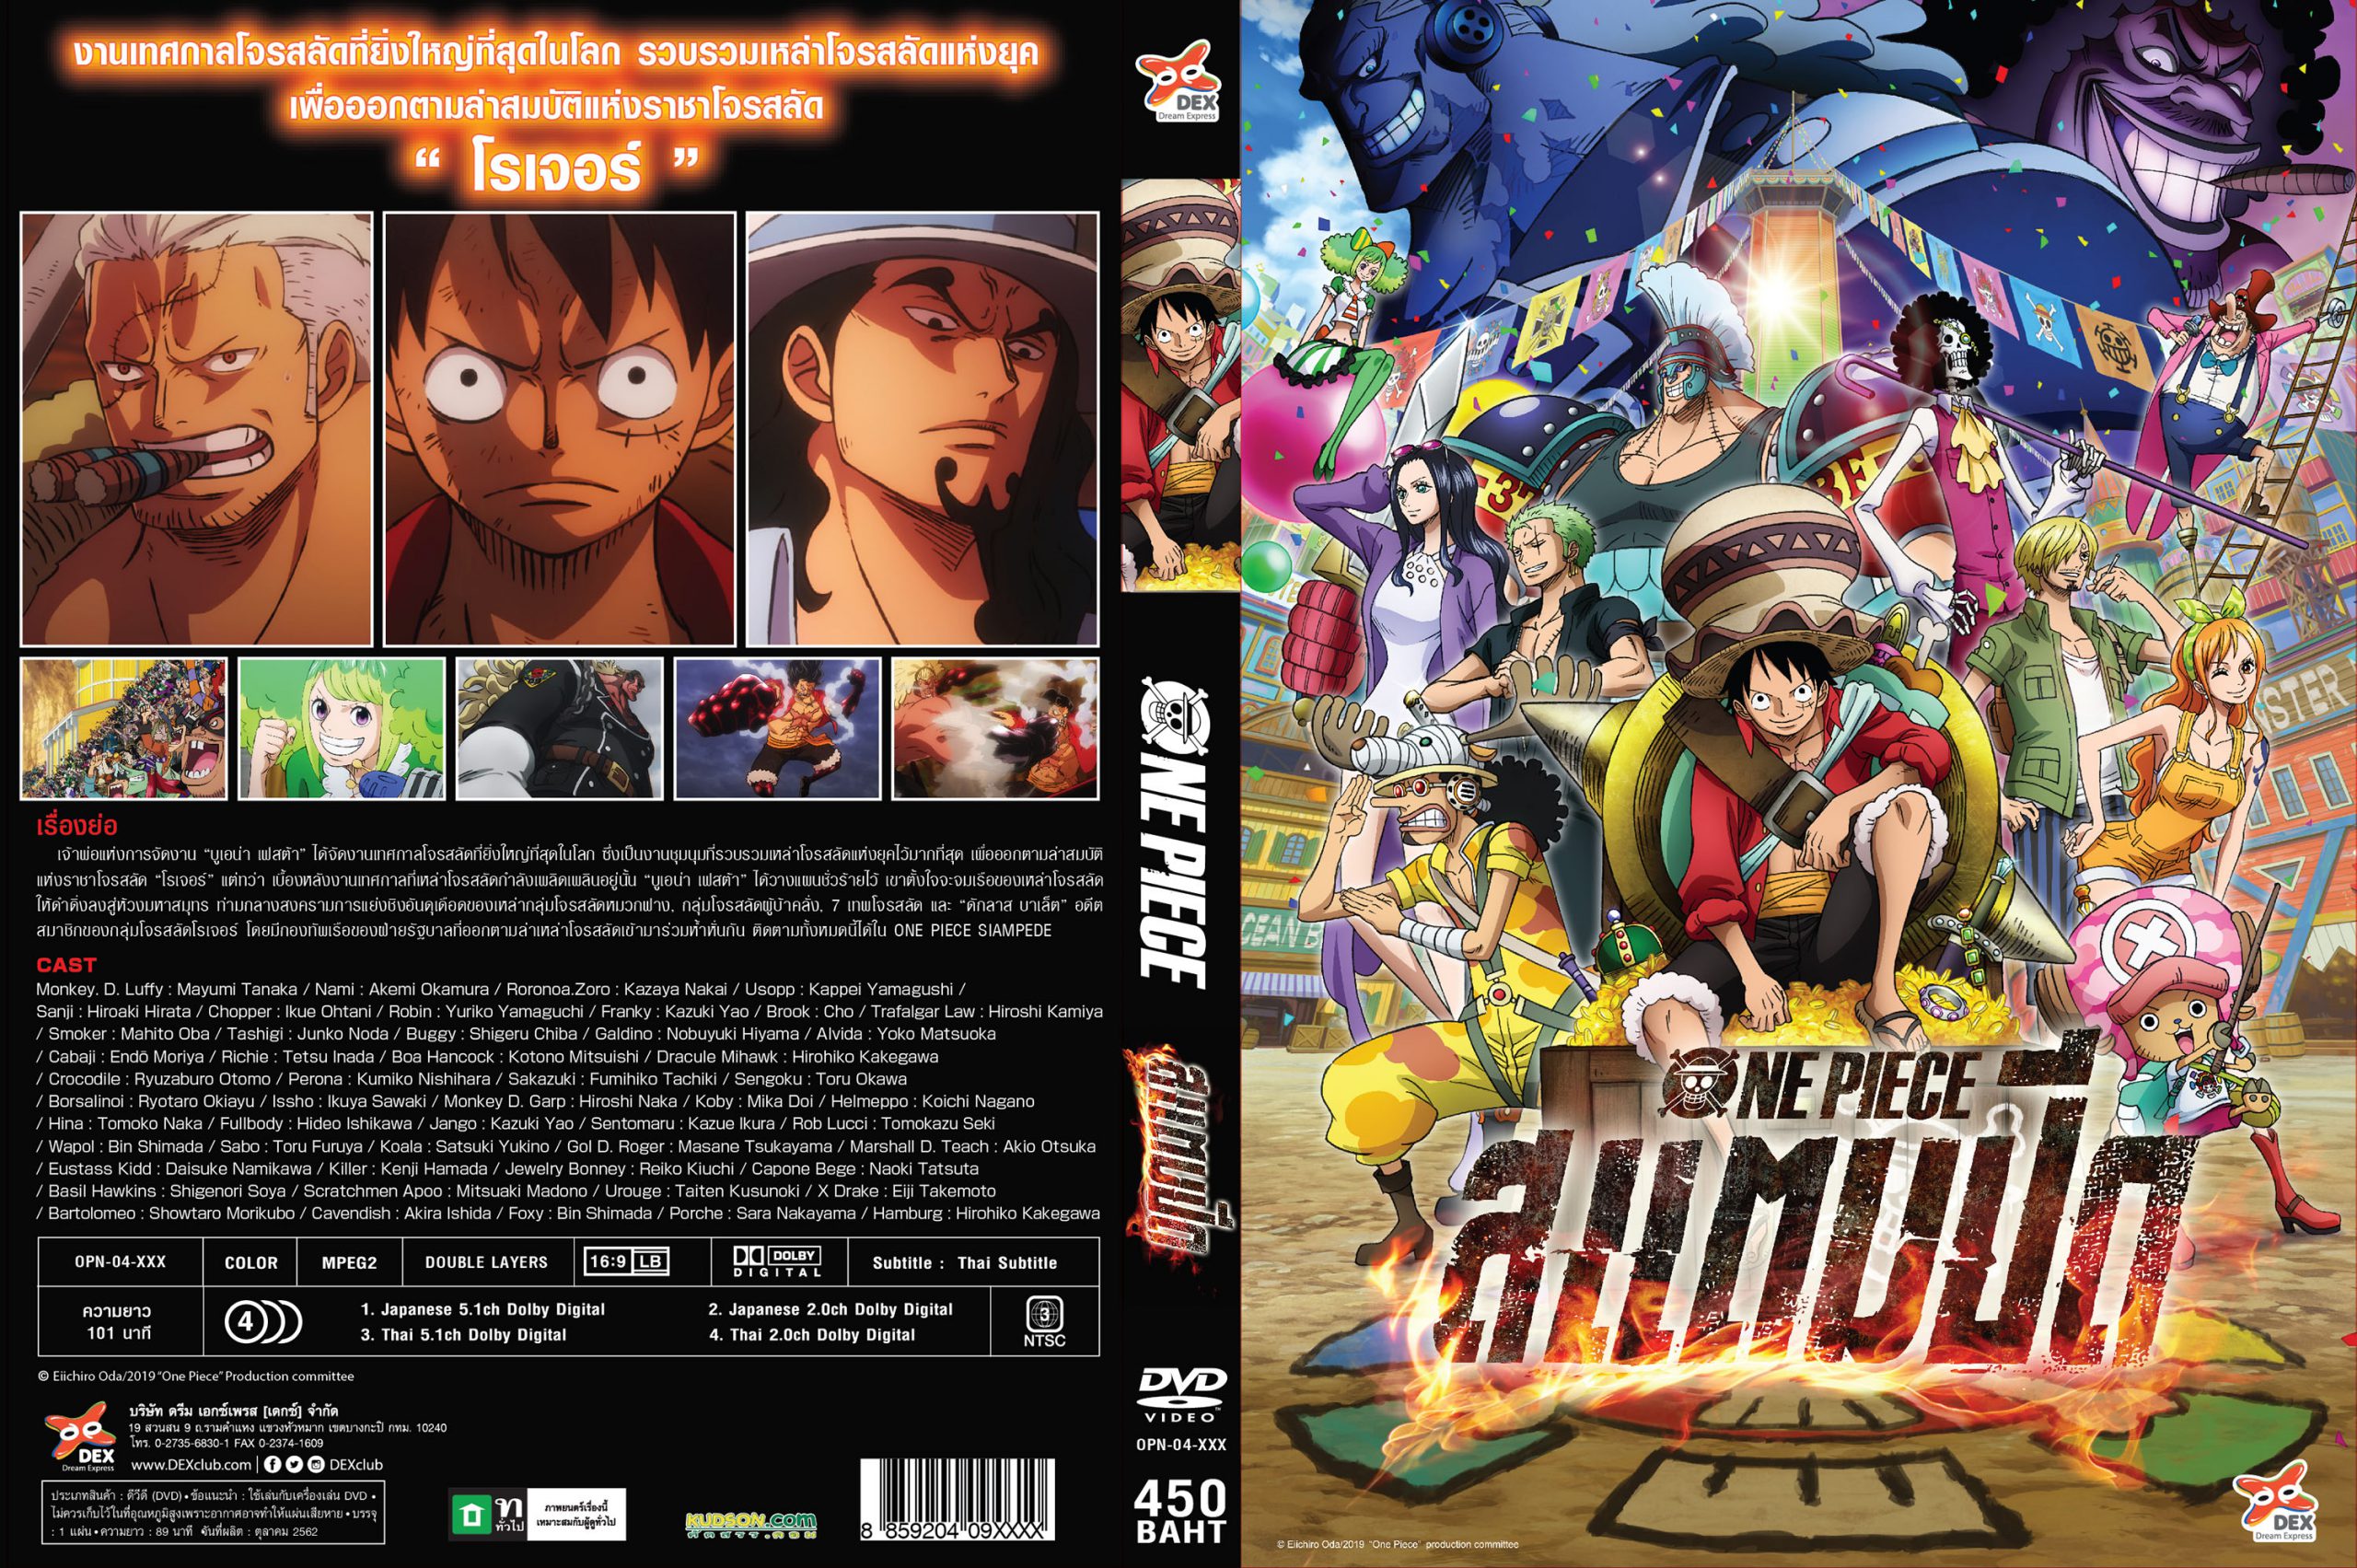 One Piece Stampede: The Movie (Blu-ray + DVD + Digital)(2020)